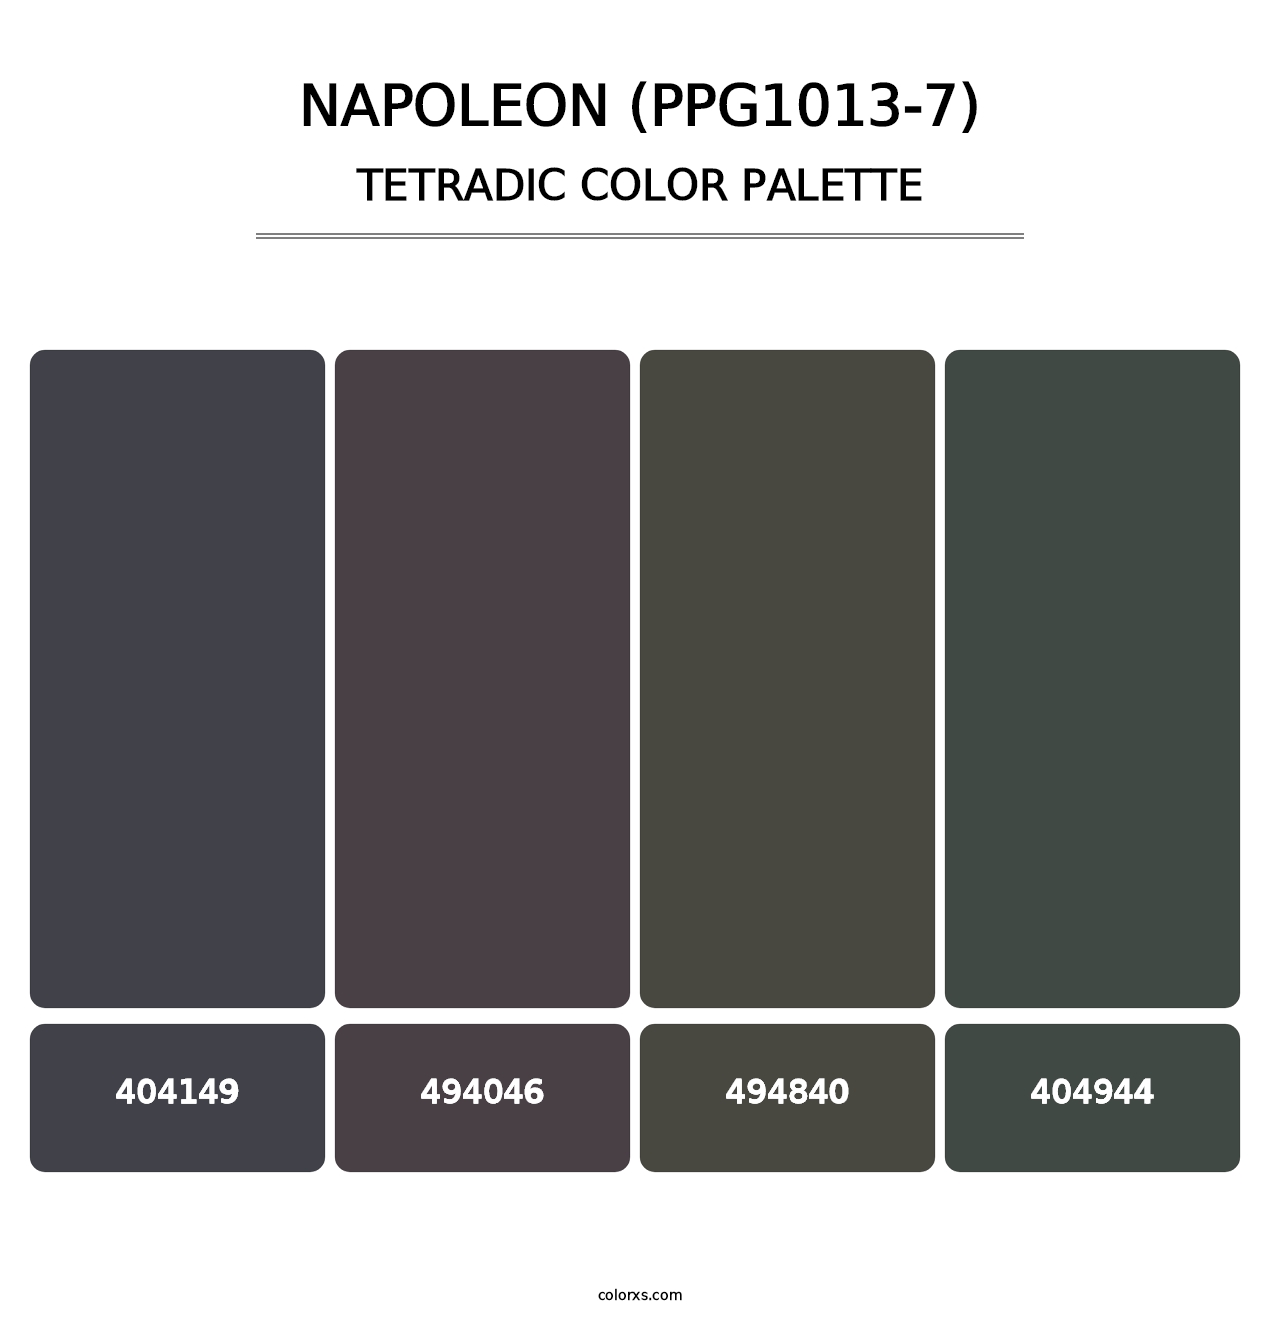 Napoleon (PPG1013-7) - Tetradic Color Palette